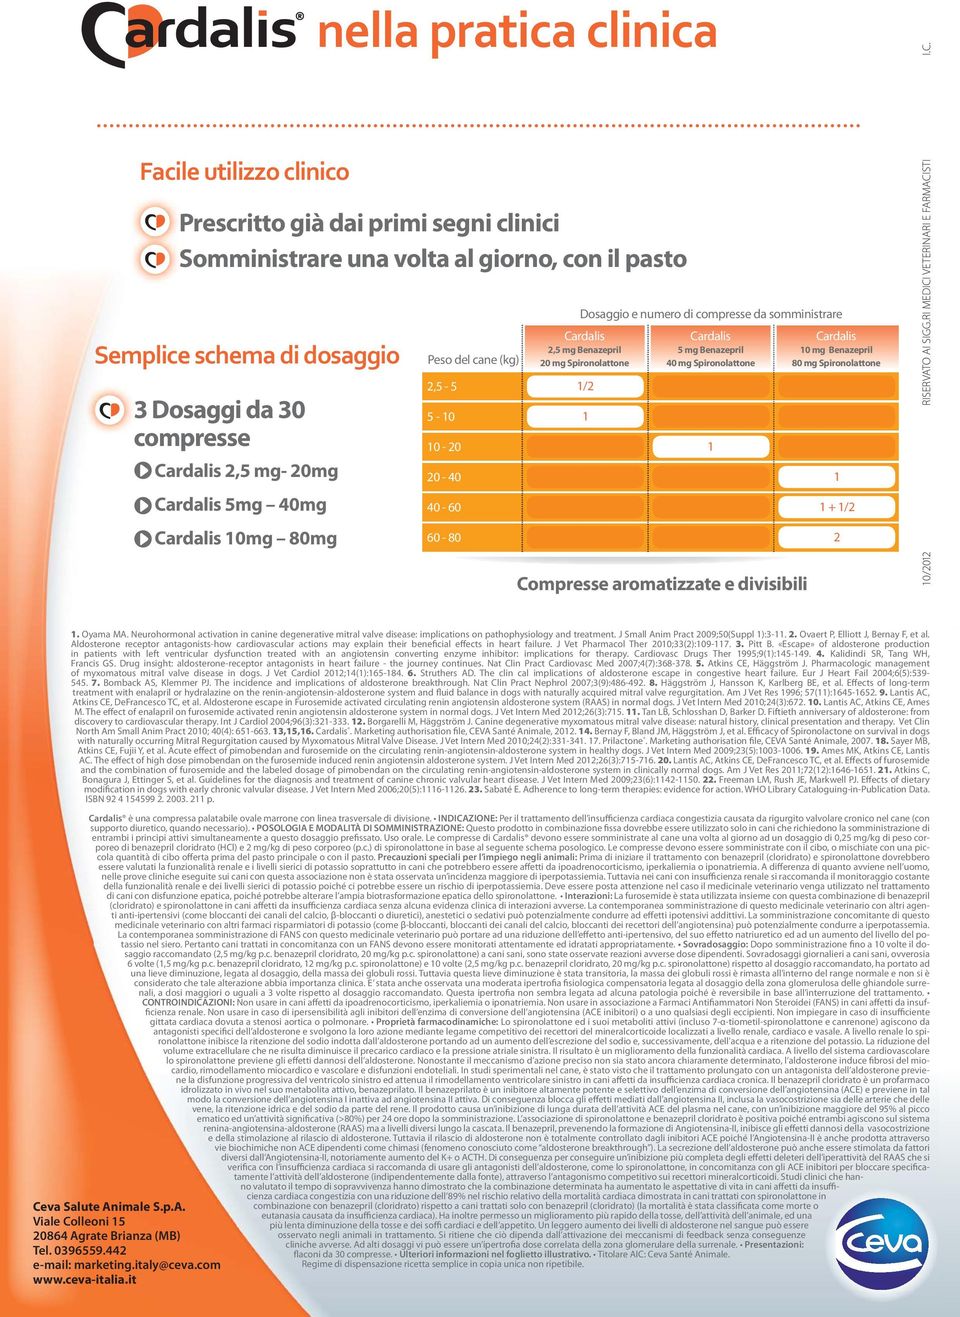 1 Cardalis 5 mg Benazepril 40 mg Spironolattone Compresse aromatizzate e divisibili 1 Cardalis 10 mg Benazepril 80 mg Spironolattone 1 1 + 1/2 2 10/2012 RISERVATO AI SIGG.